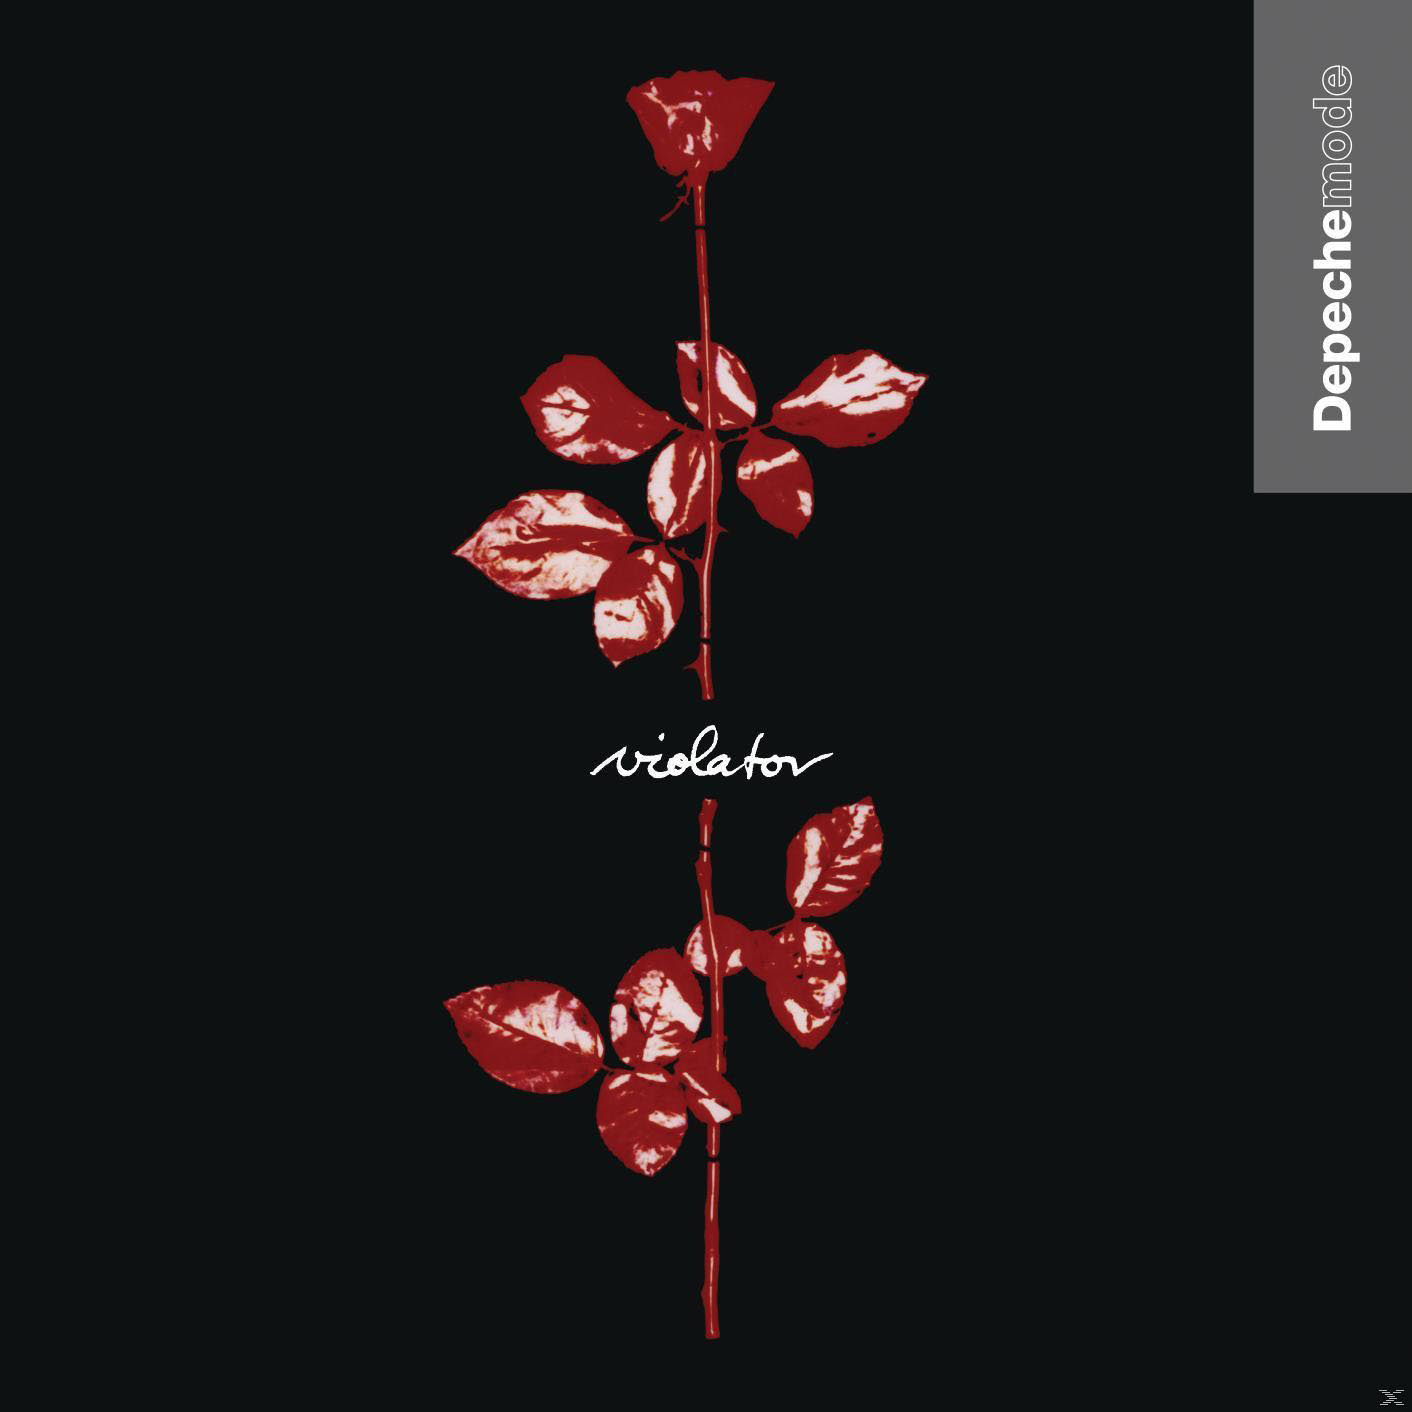 Mode - (Vinyl) - Depeche Violator